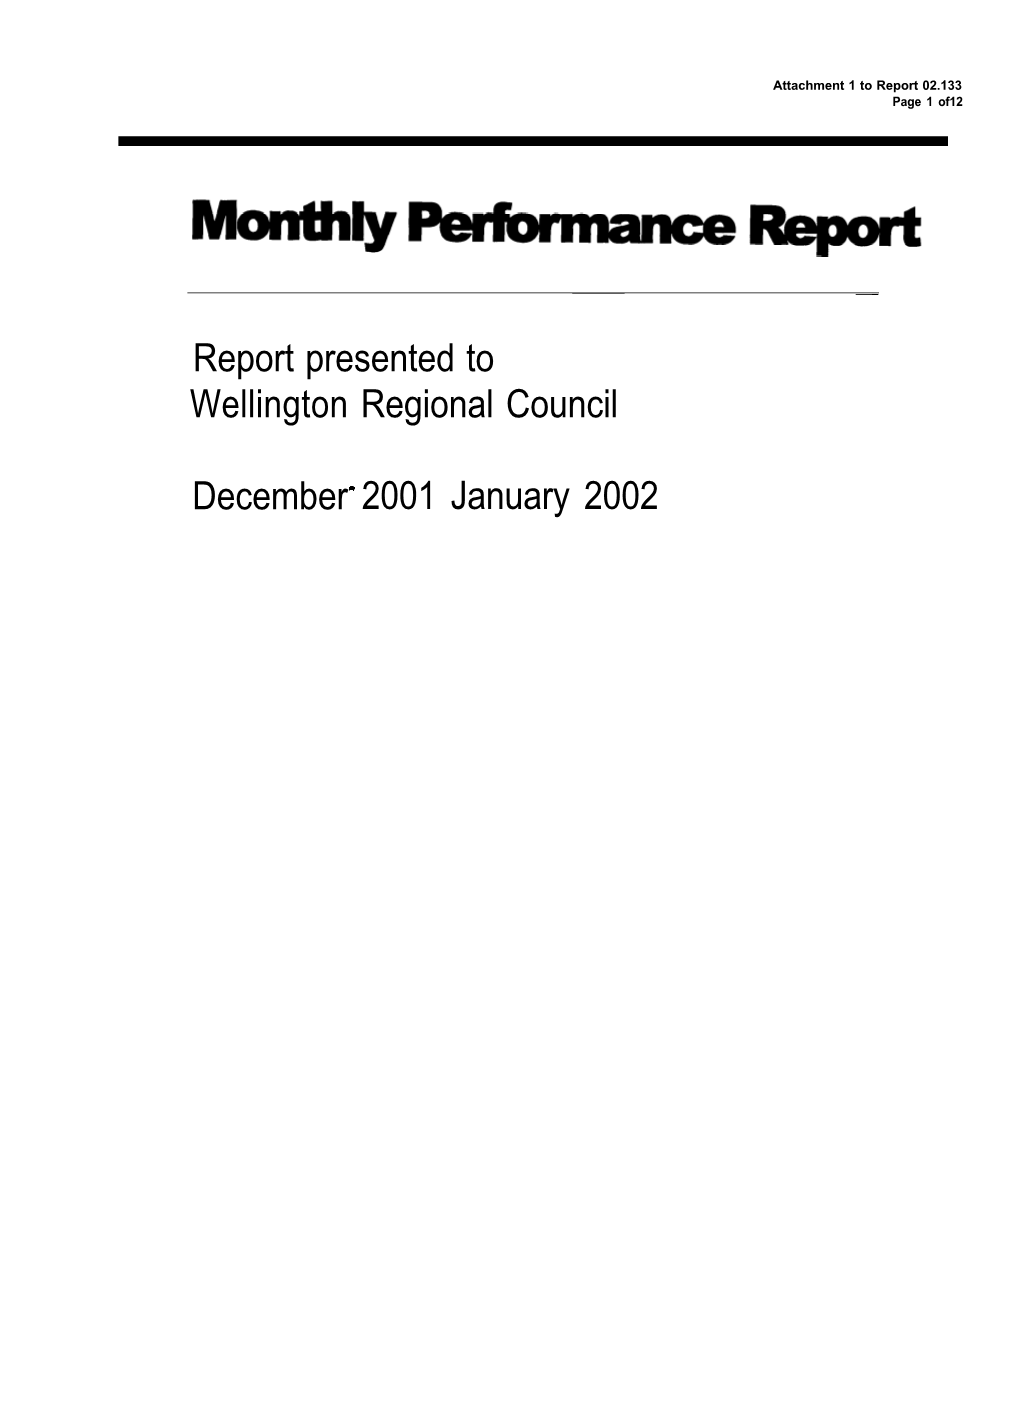 Report Presented to Wellington Regional Council Decemberli